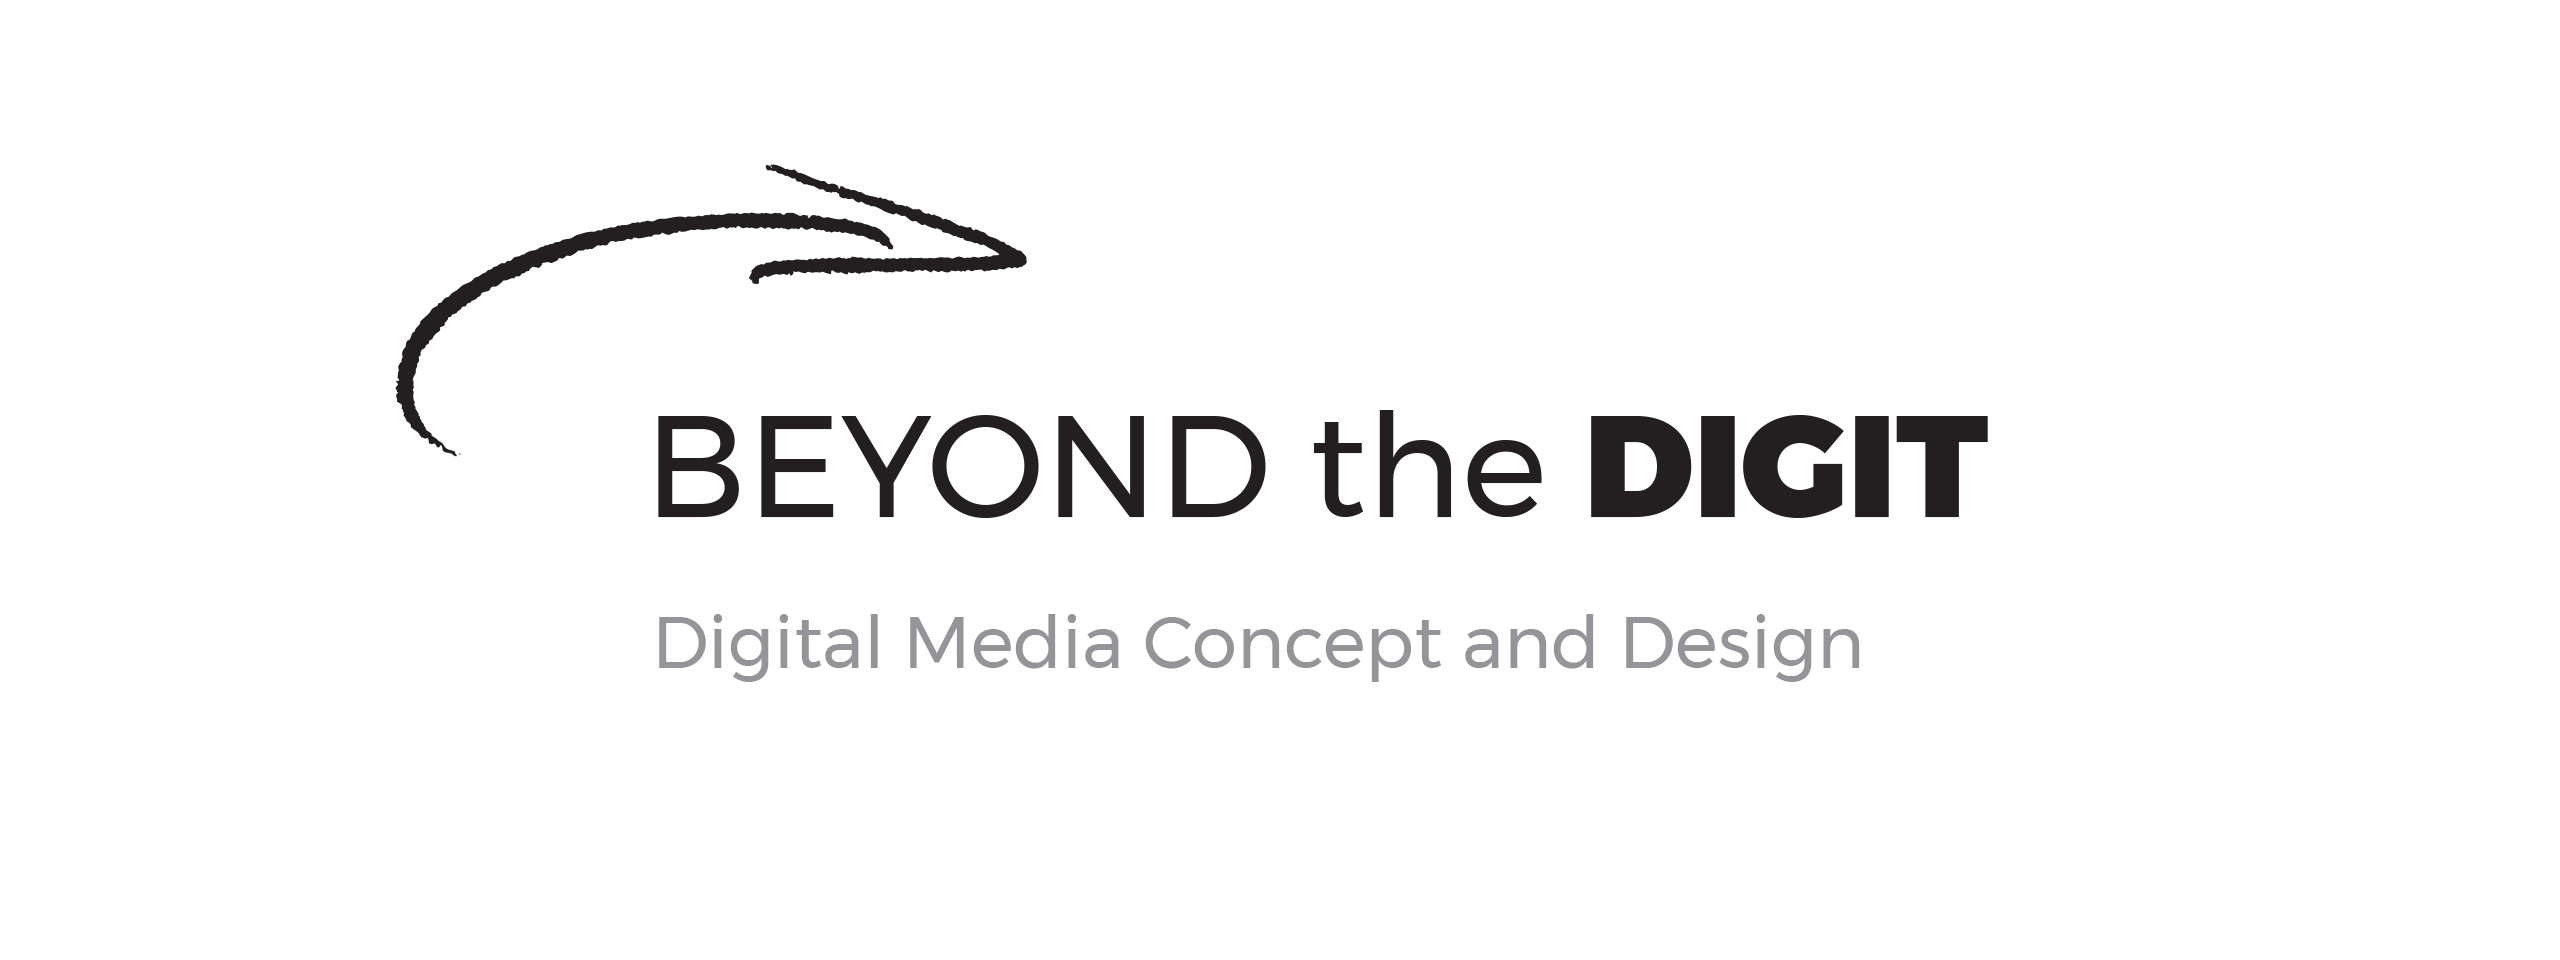 Beyond the Digit - Digital Media Concept and Design